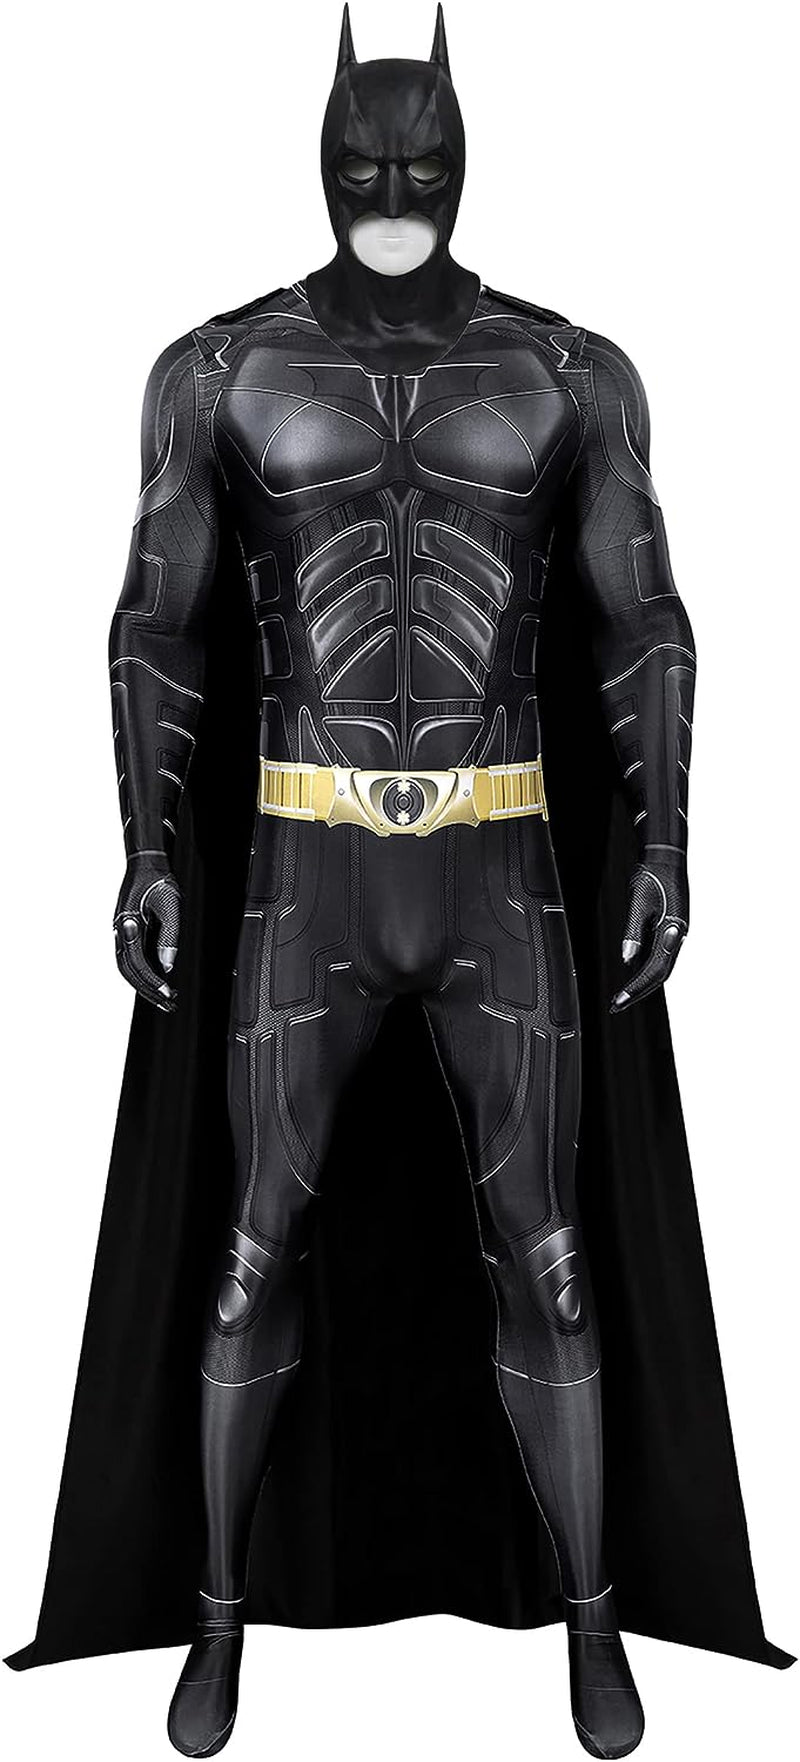 Vickkt Batman Cosplay Costume for Adult, Dark Knight Superhero Jumpsuit Cloak Outfit Mask for Halloween Party  vickkt   